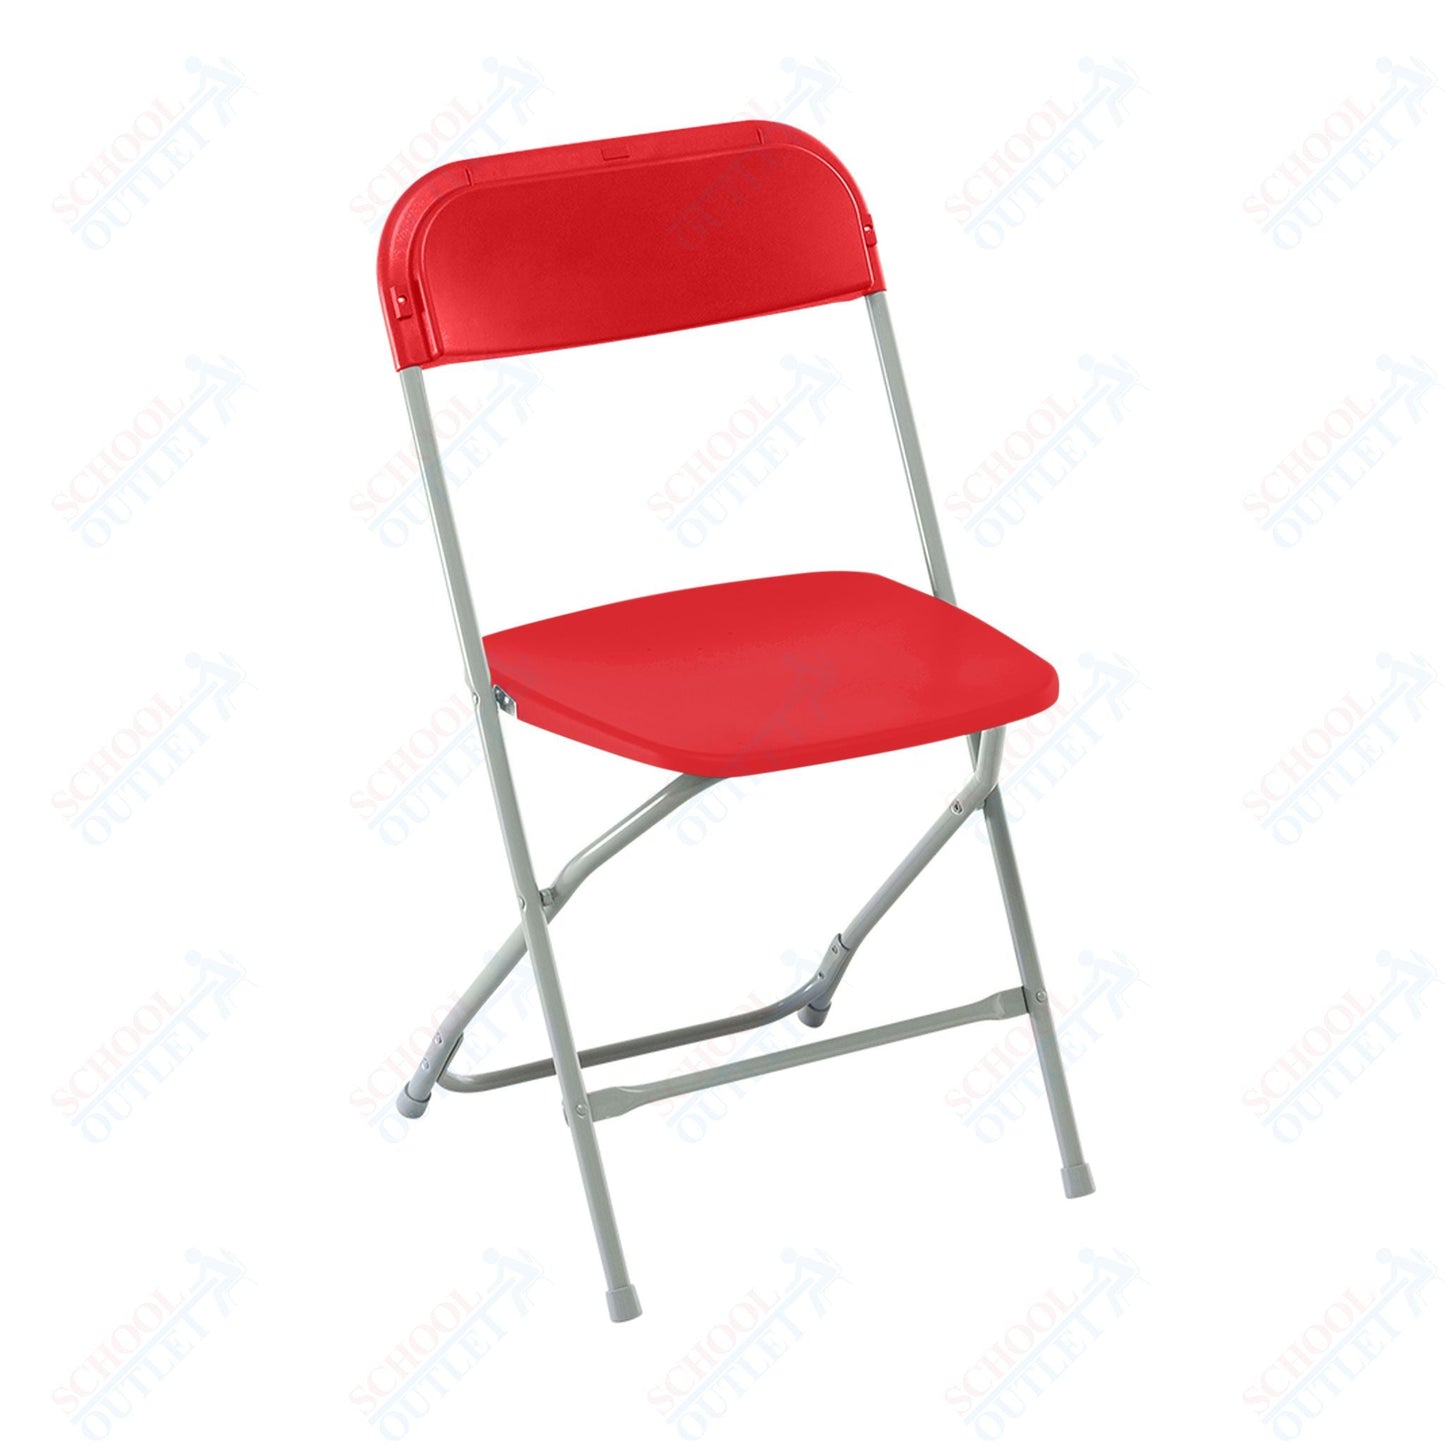 AmTab Folding Chair - 17.5"W x 18"L x 31.5"H - Seat Height 17.75"H (AMT - FOLDINGCHAIR - 1) - SchoolOutlet